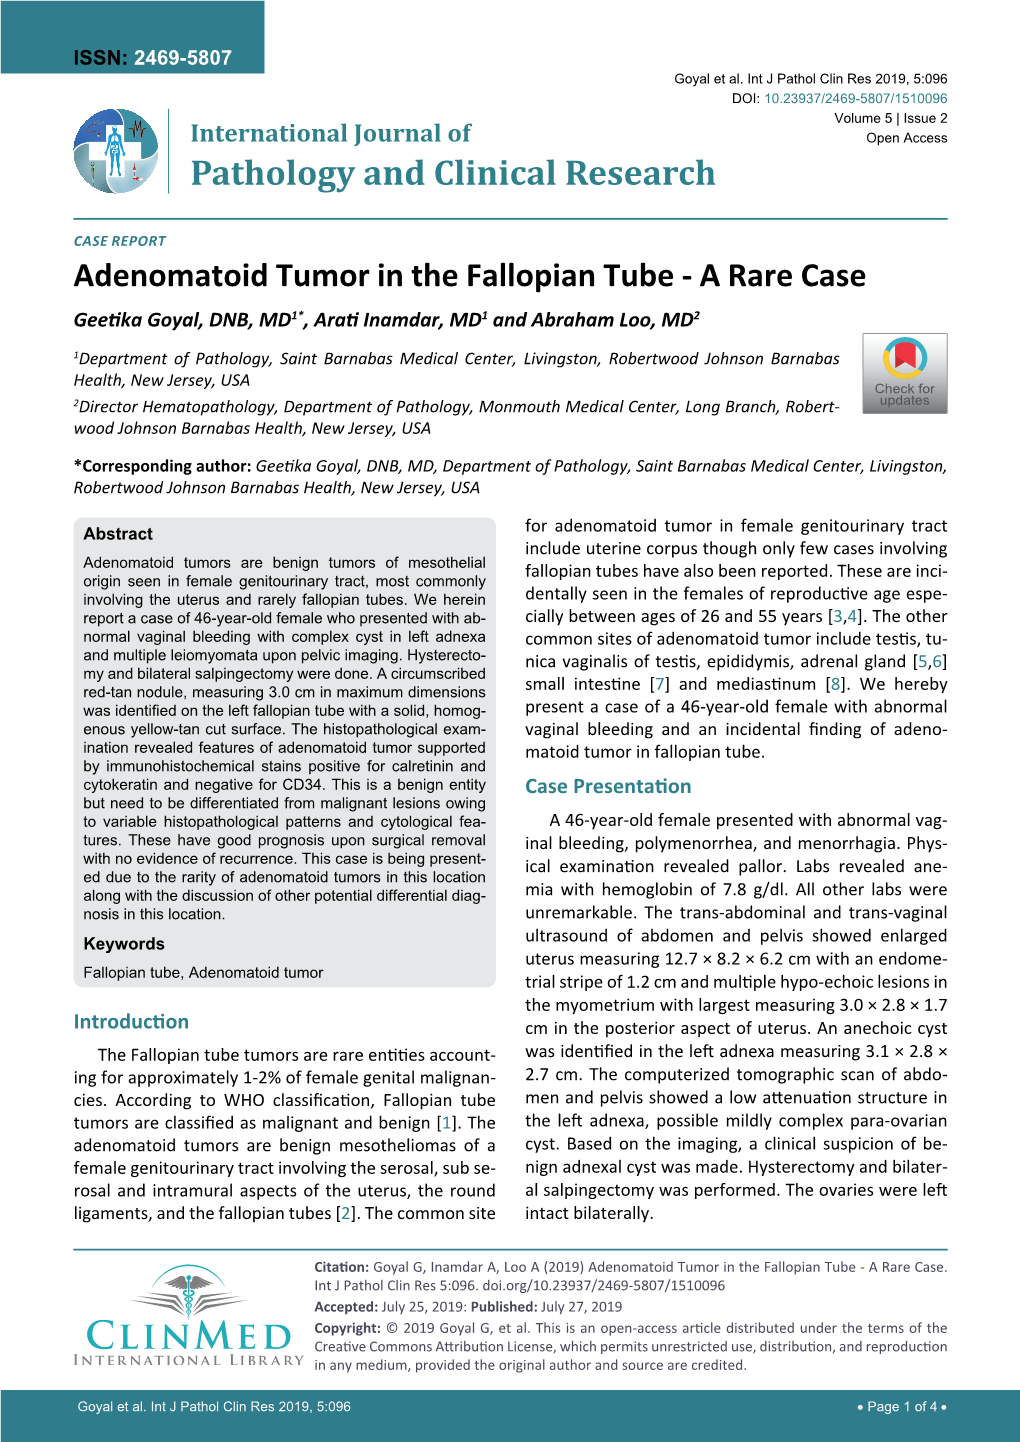 Adenomatoid Tumor in the Fallopian Tube - a Rare Case Geetika Goyal, DNB, MD1*, Arati Inamdar, MD1 and Abraham Loo, MD2